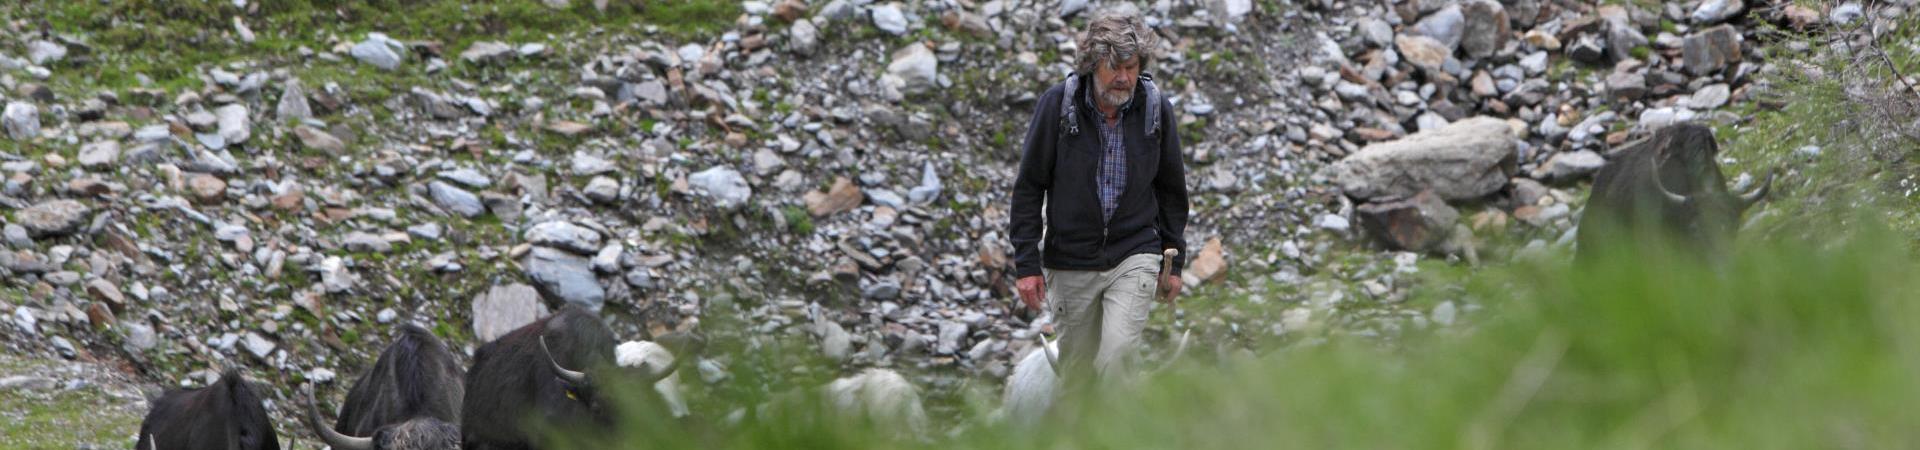 Reinhold Messner & seine Yaks